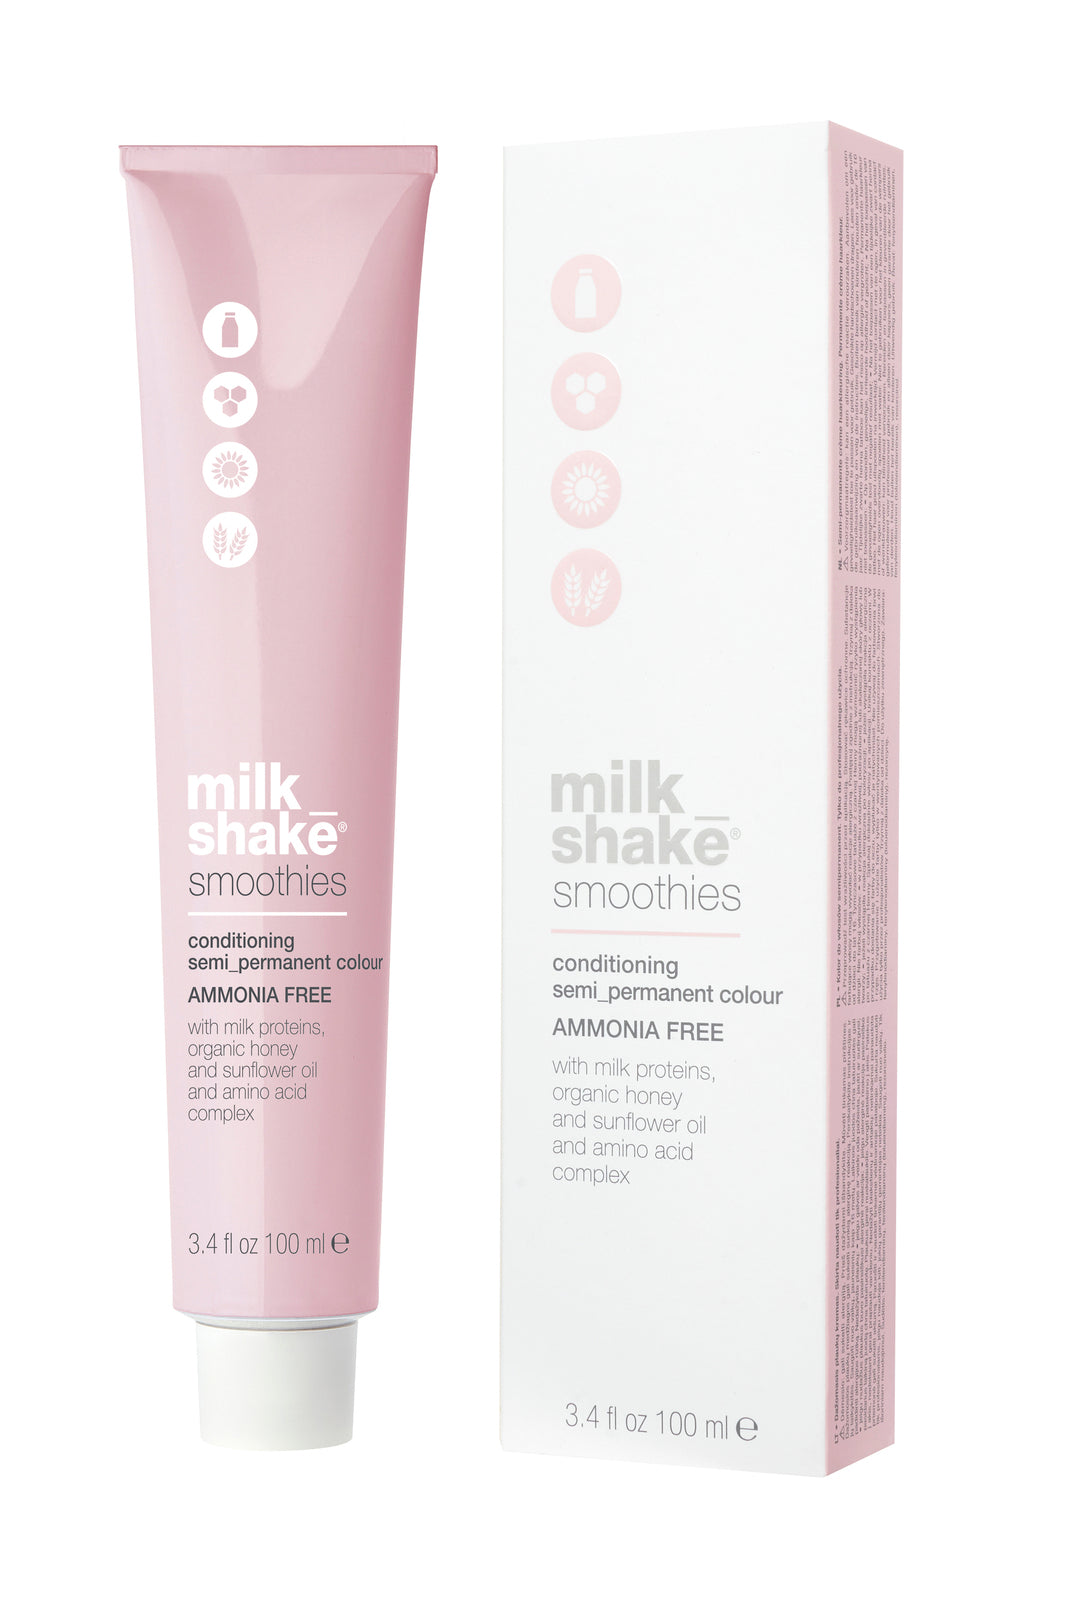 Milkshake smoothies semi-permanent color 9.1